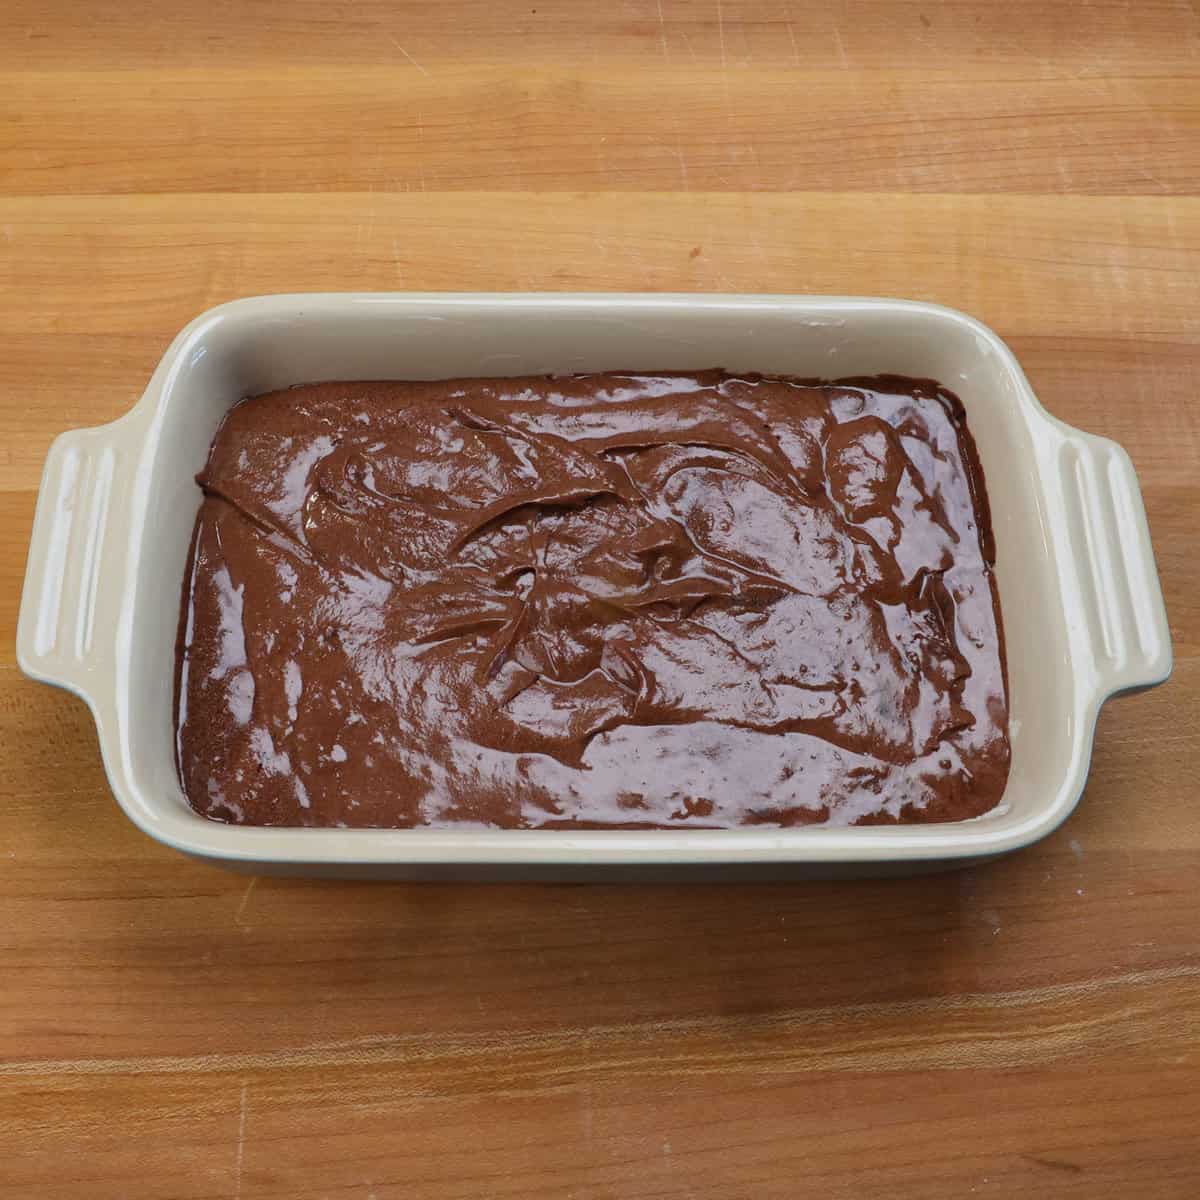 German chocolate cake batter in a small rectangular baking dish.